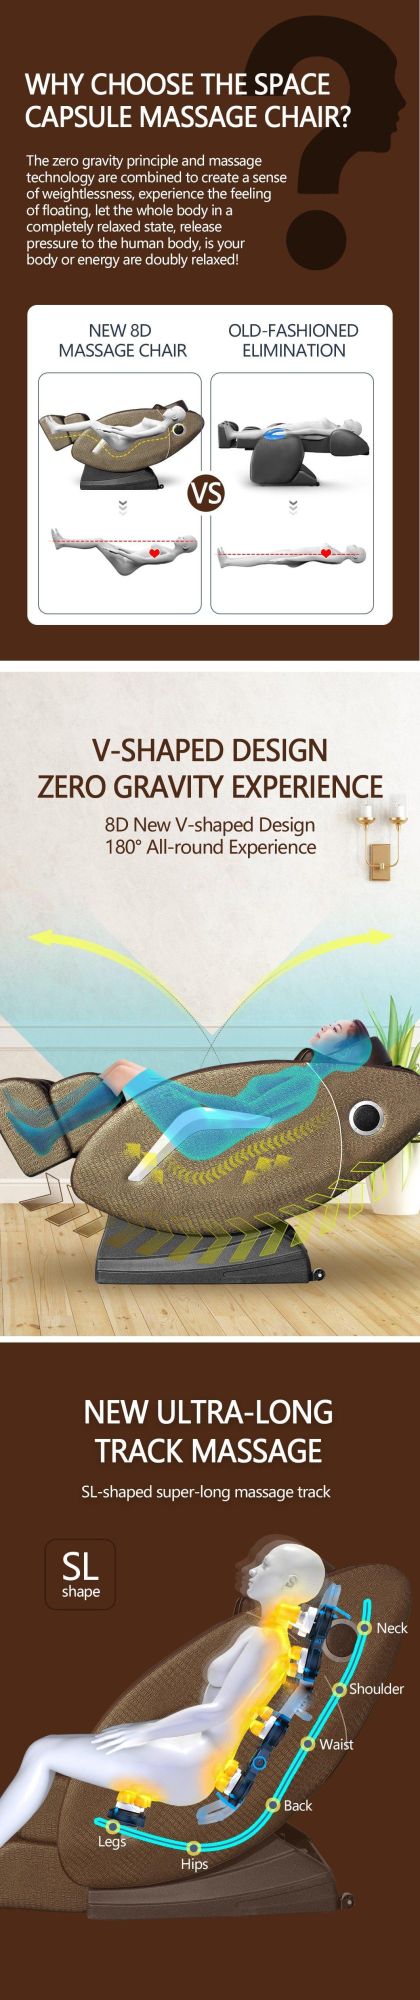 Hot Sale Electric Full Body Zero Gravity Home Use Healthcare Full Body Massage Chair